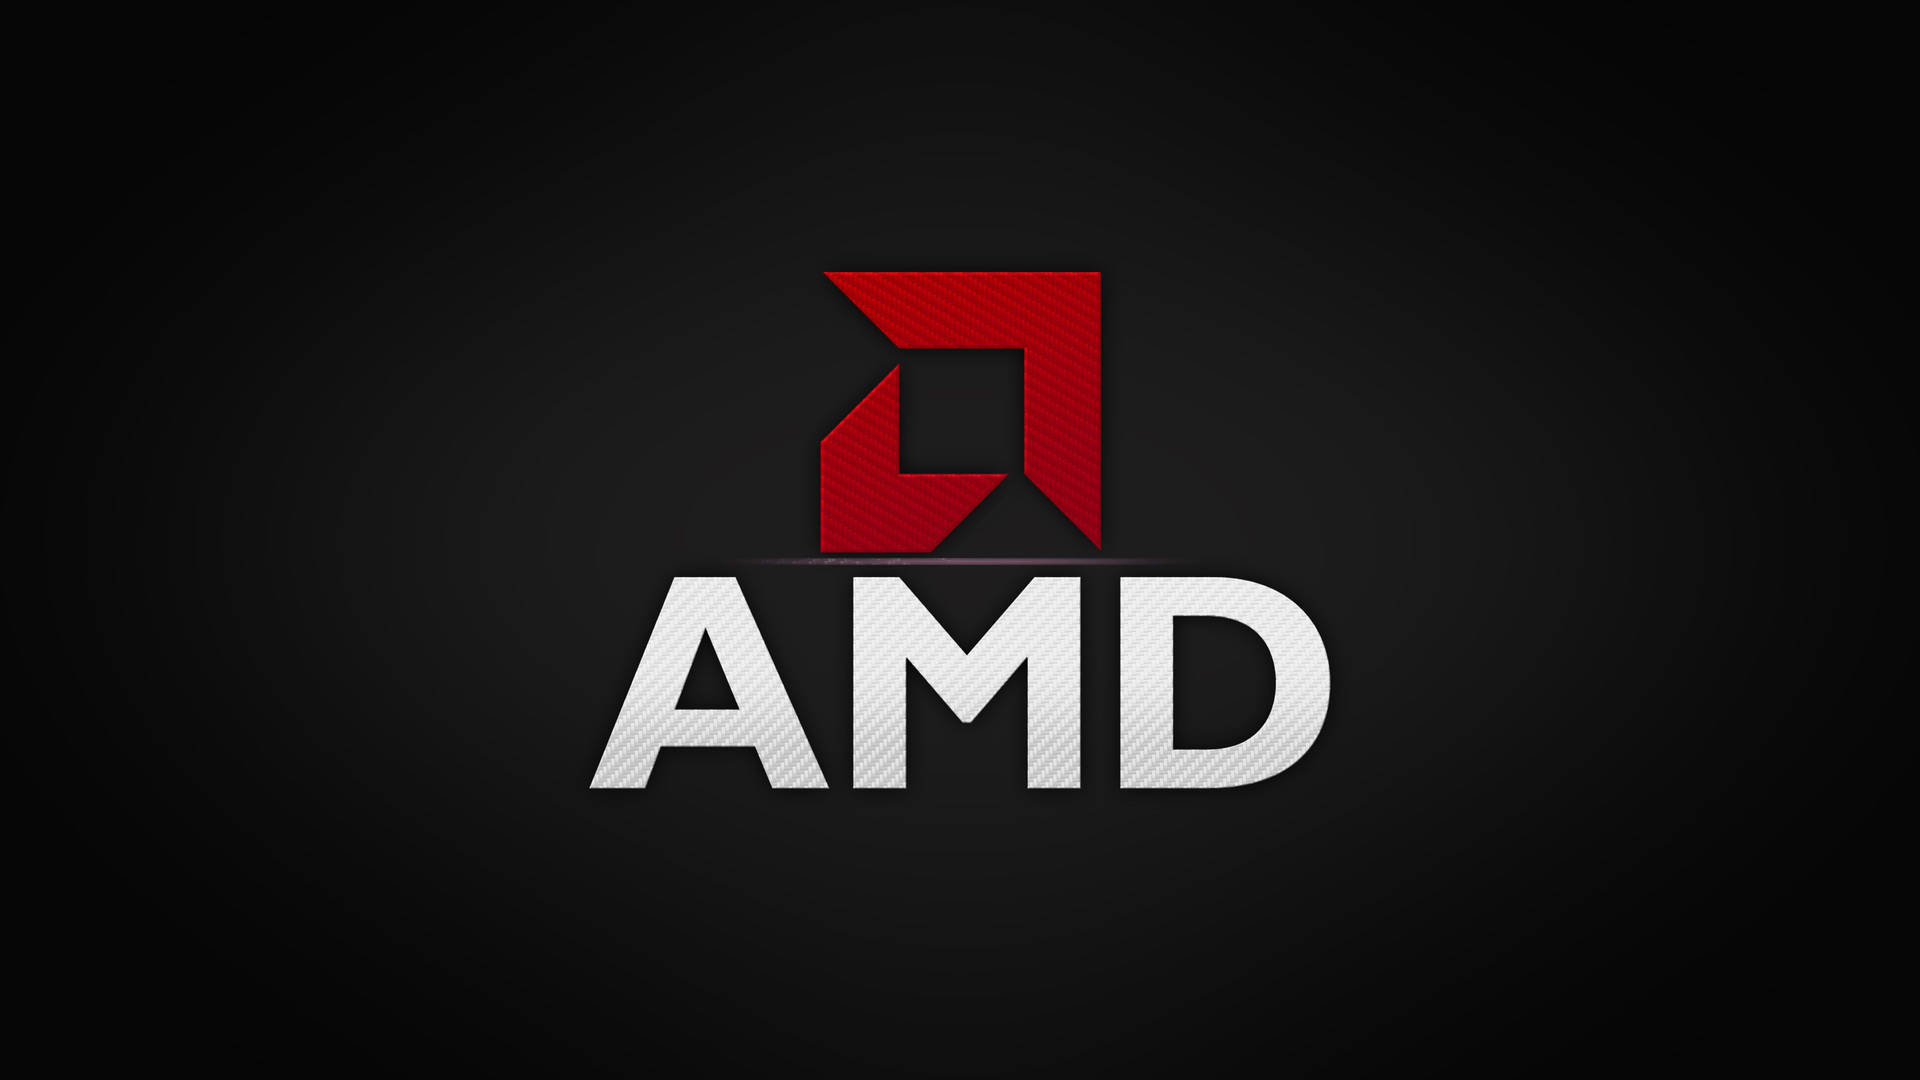 Amd Logo Metallic Texture Background